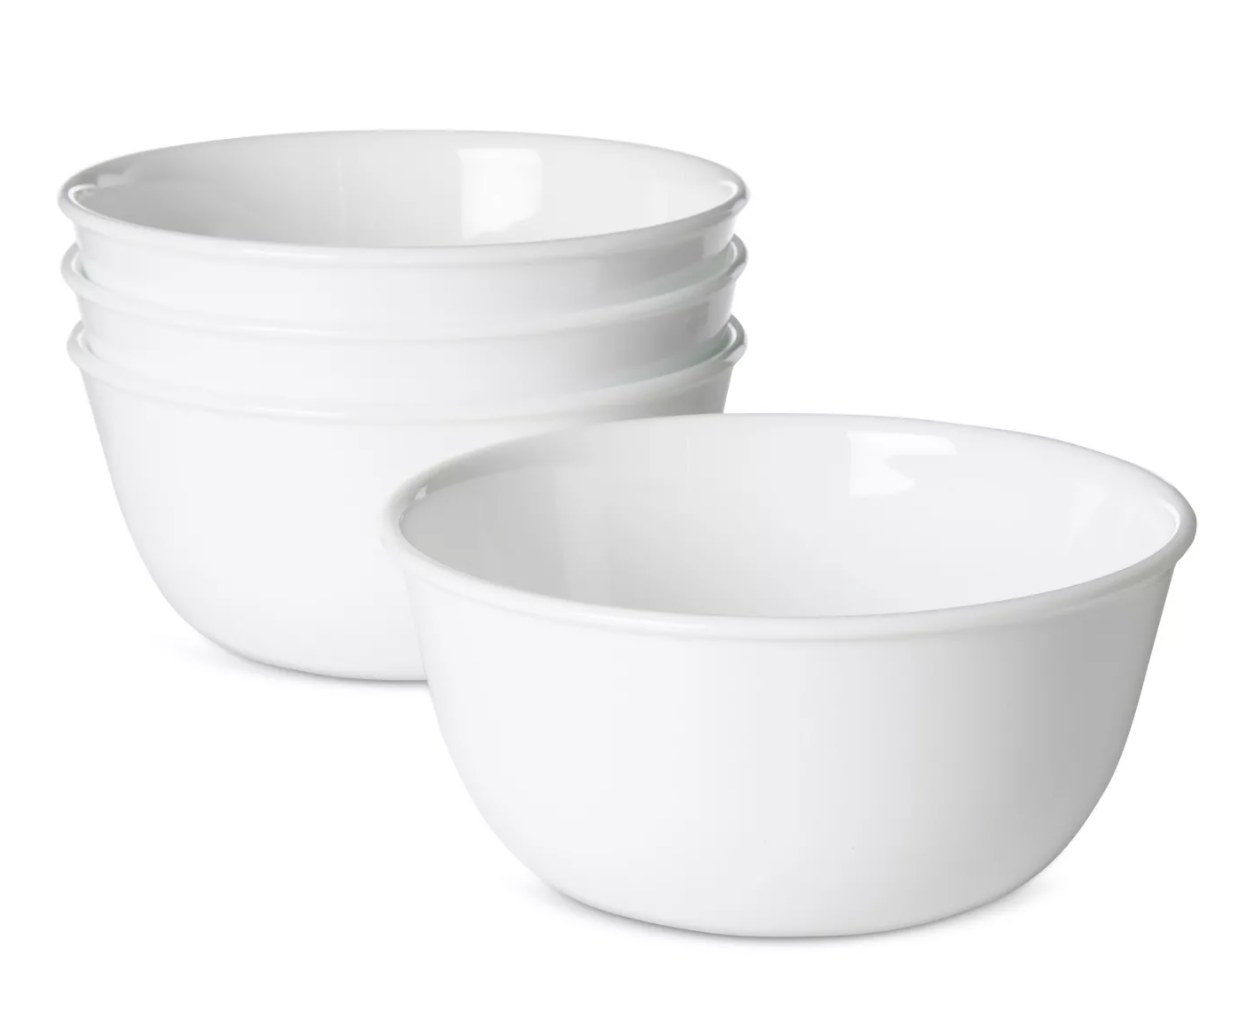 The white Corelle bowls